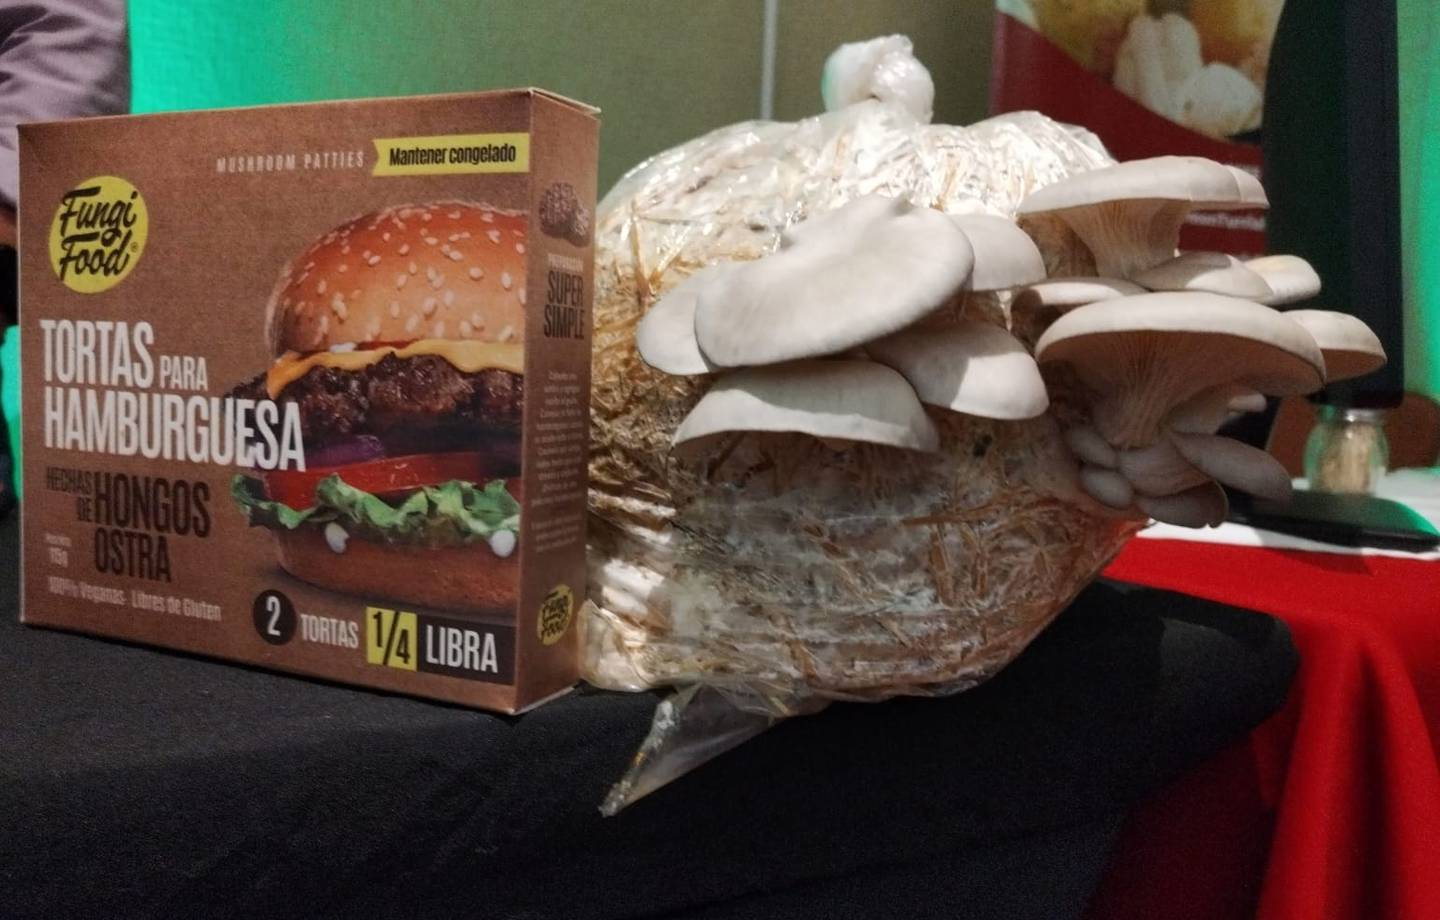 Tortas para hamburguesa lograda de hongos ostra en Costa Rica. Emprendimiento Honguiticos